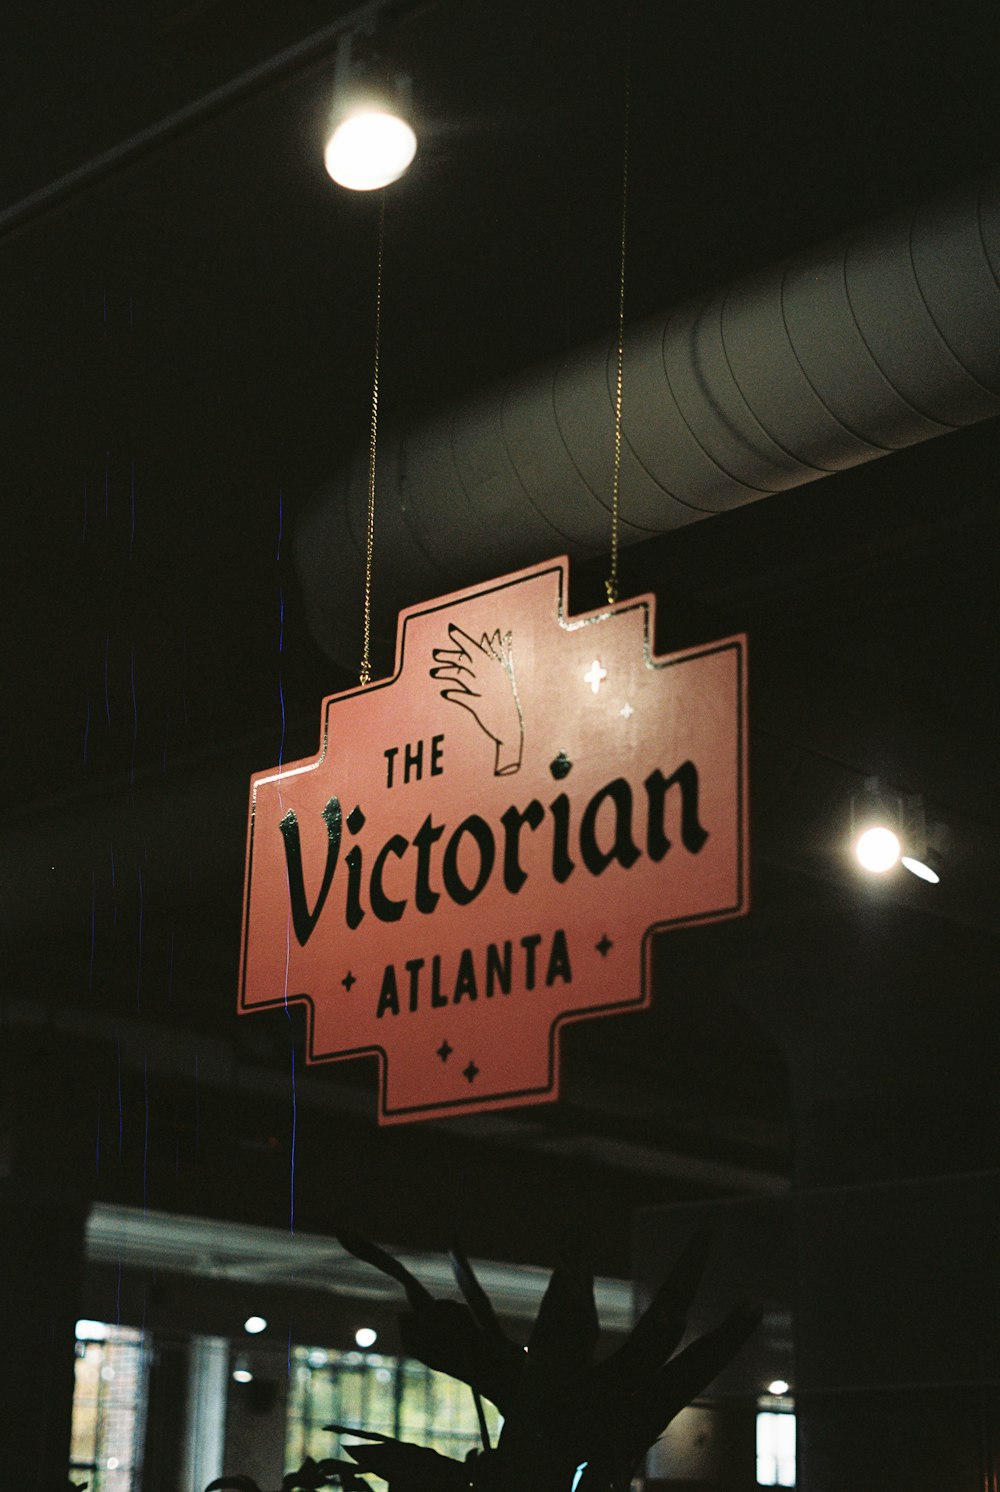 The Victorian Atlanta sign